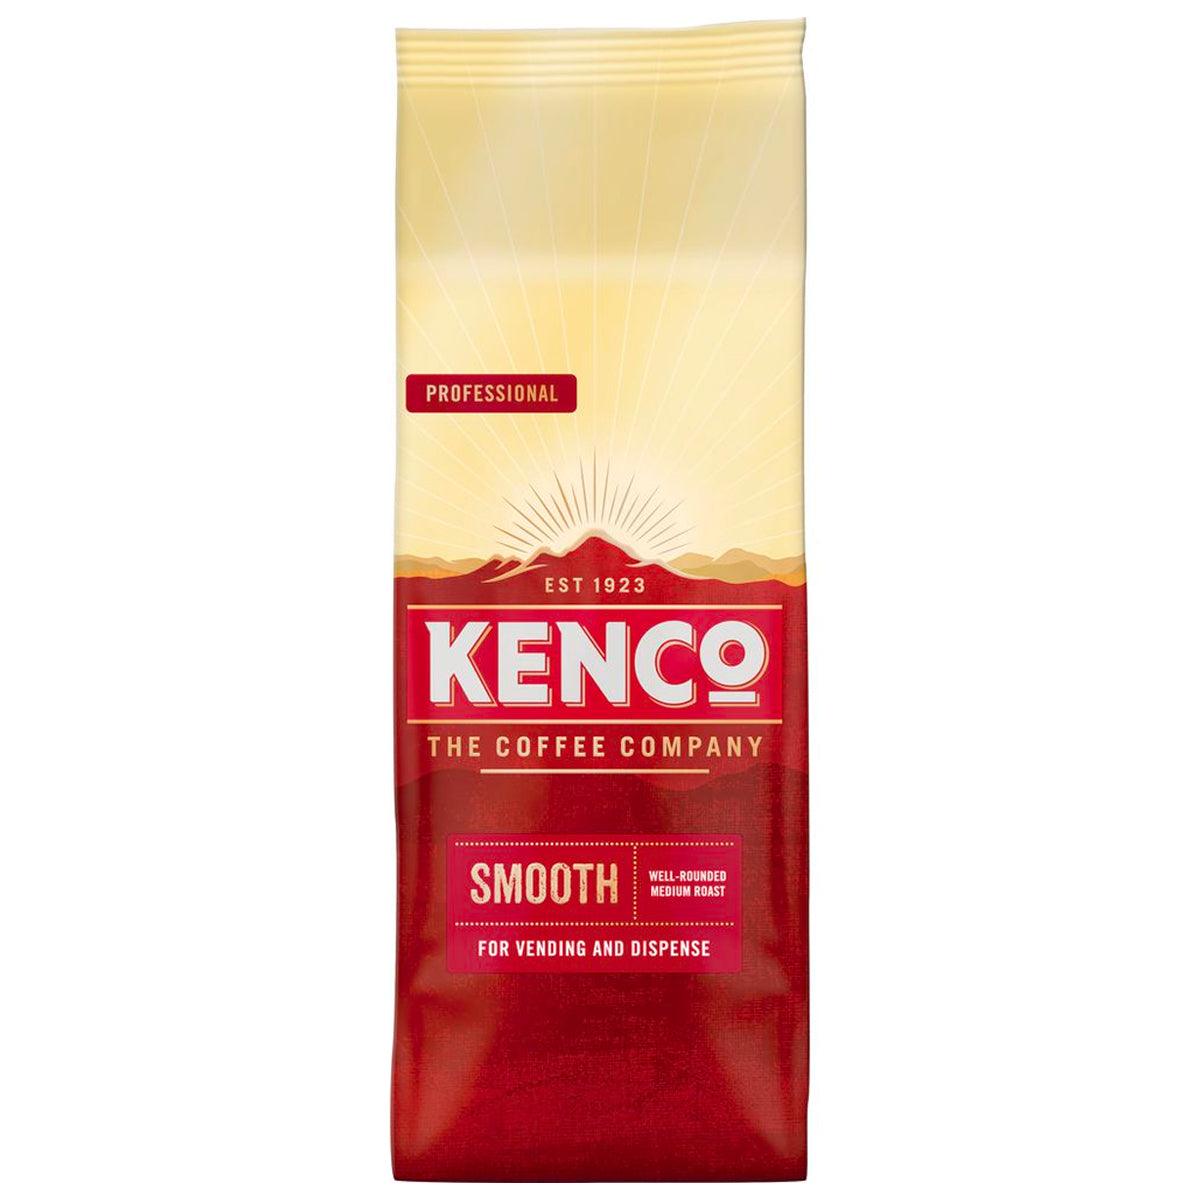 Kenco Smooth Roast Vending Coffee - 300g Bag - Vending Superstore